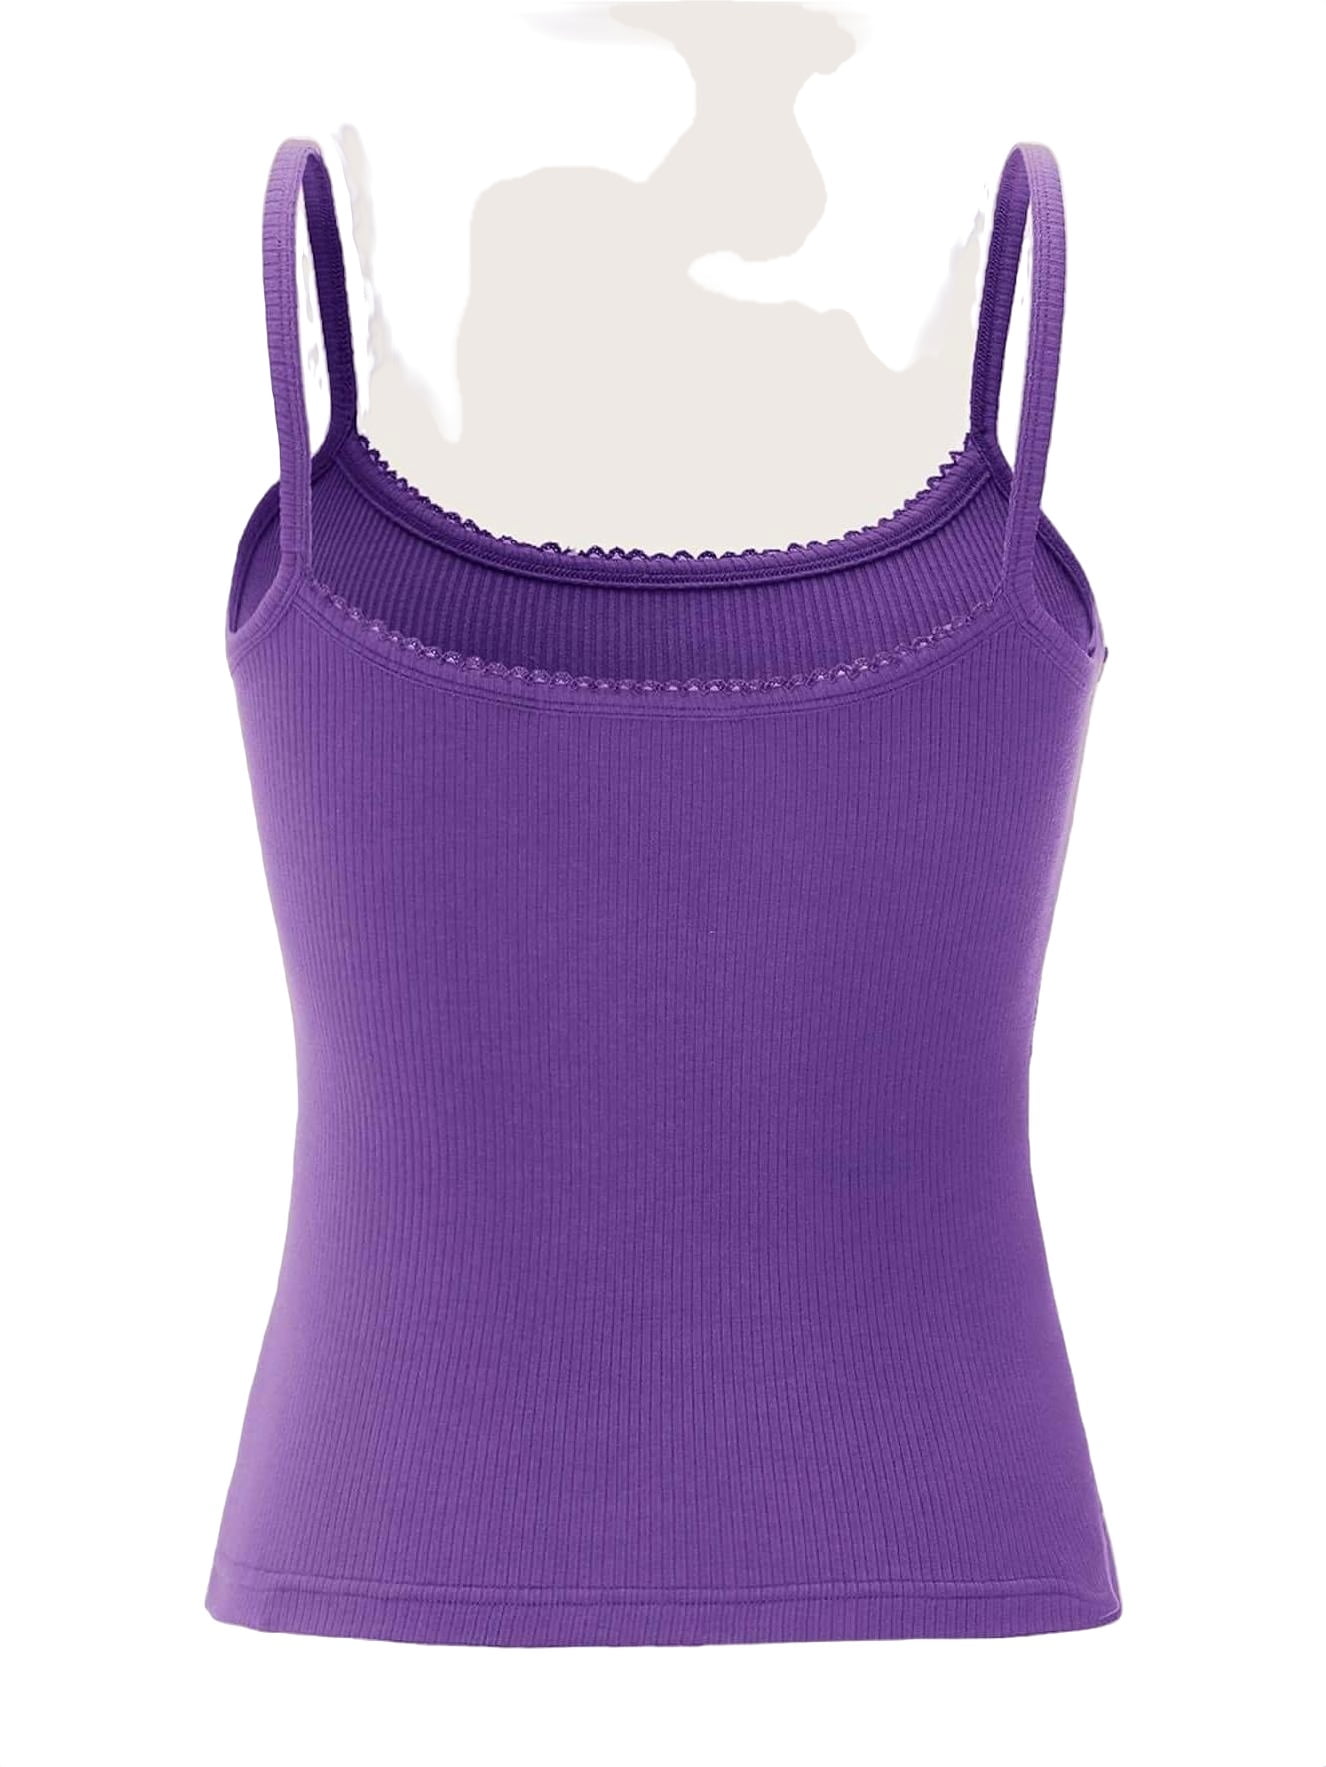 Satva Organic Cotton Sports Cami Tank Top For Women - Purple (XL)